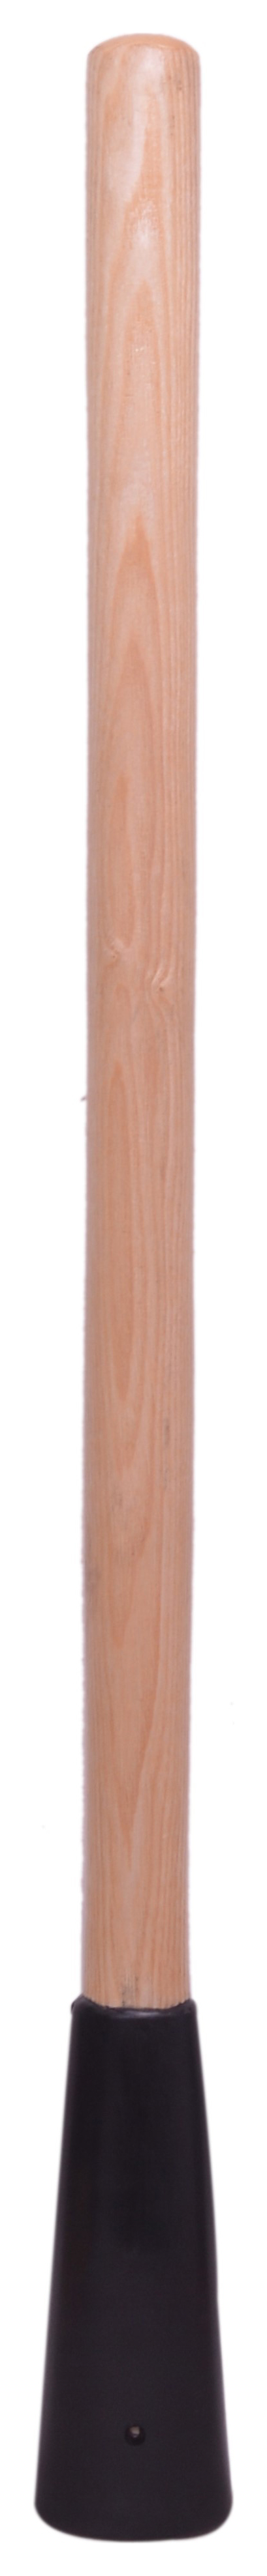 Wickes Wooden Pick Axe Handle - 900mm